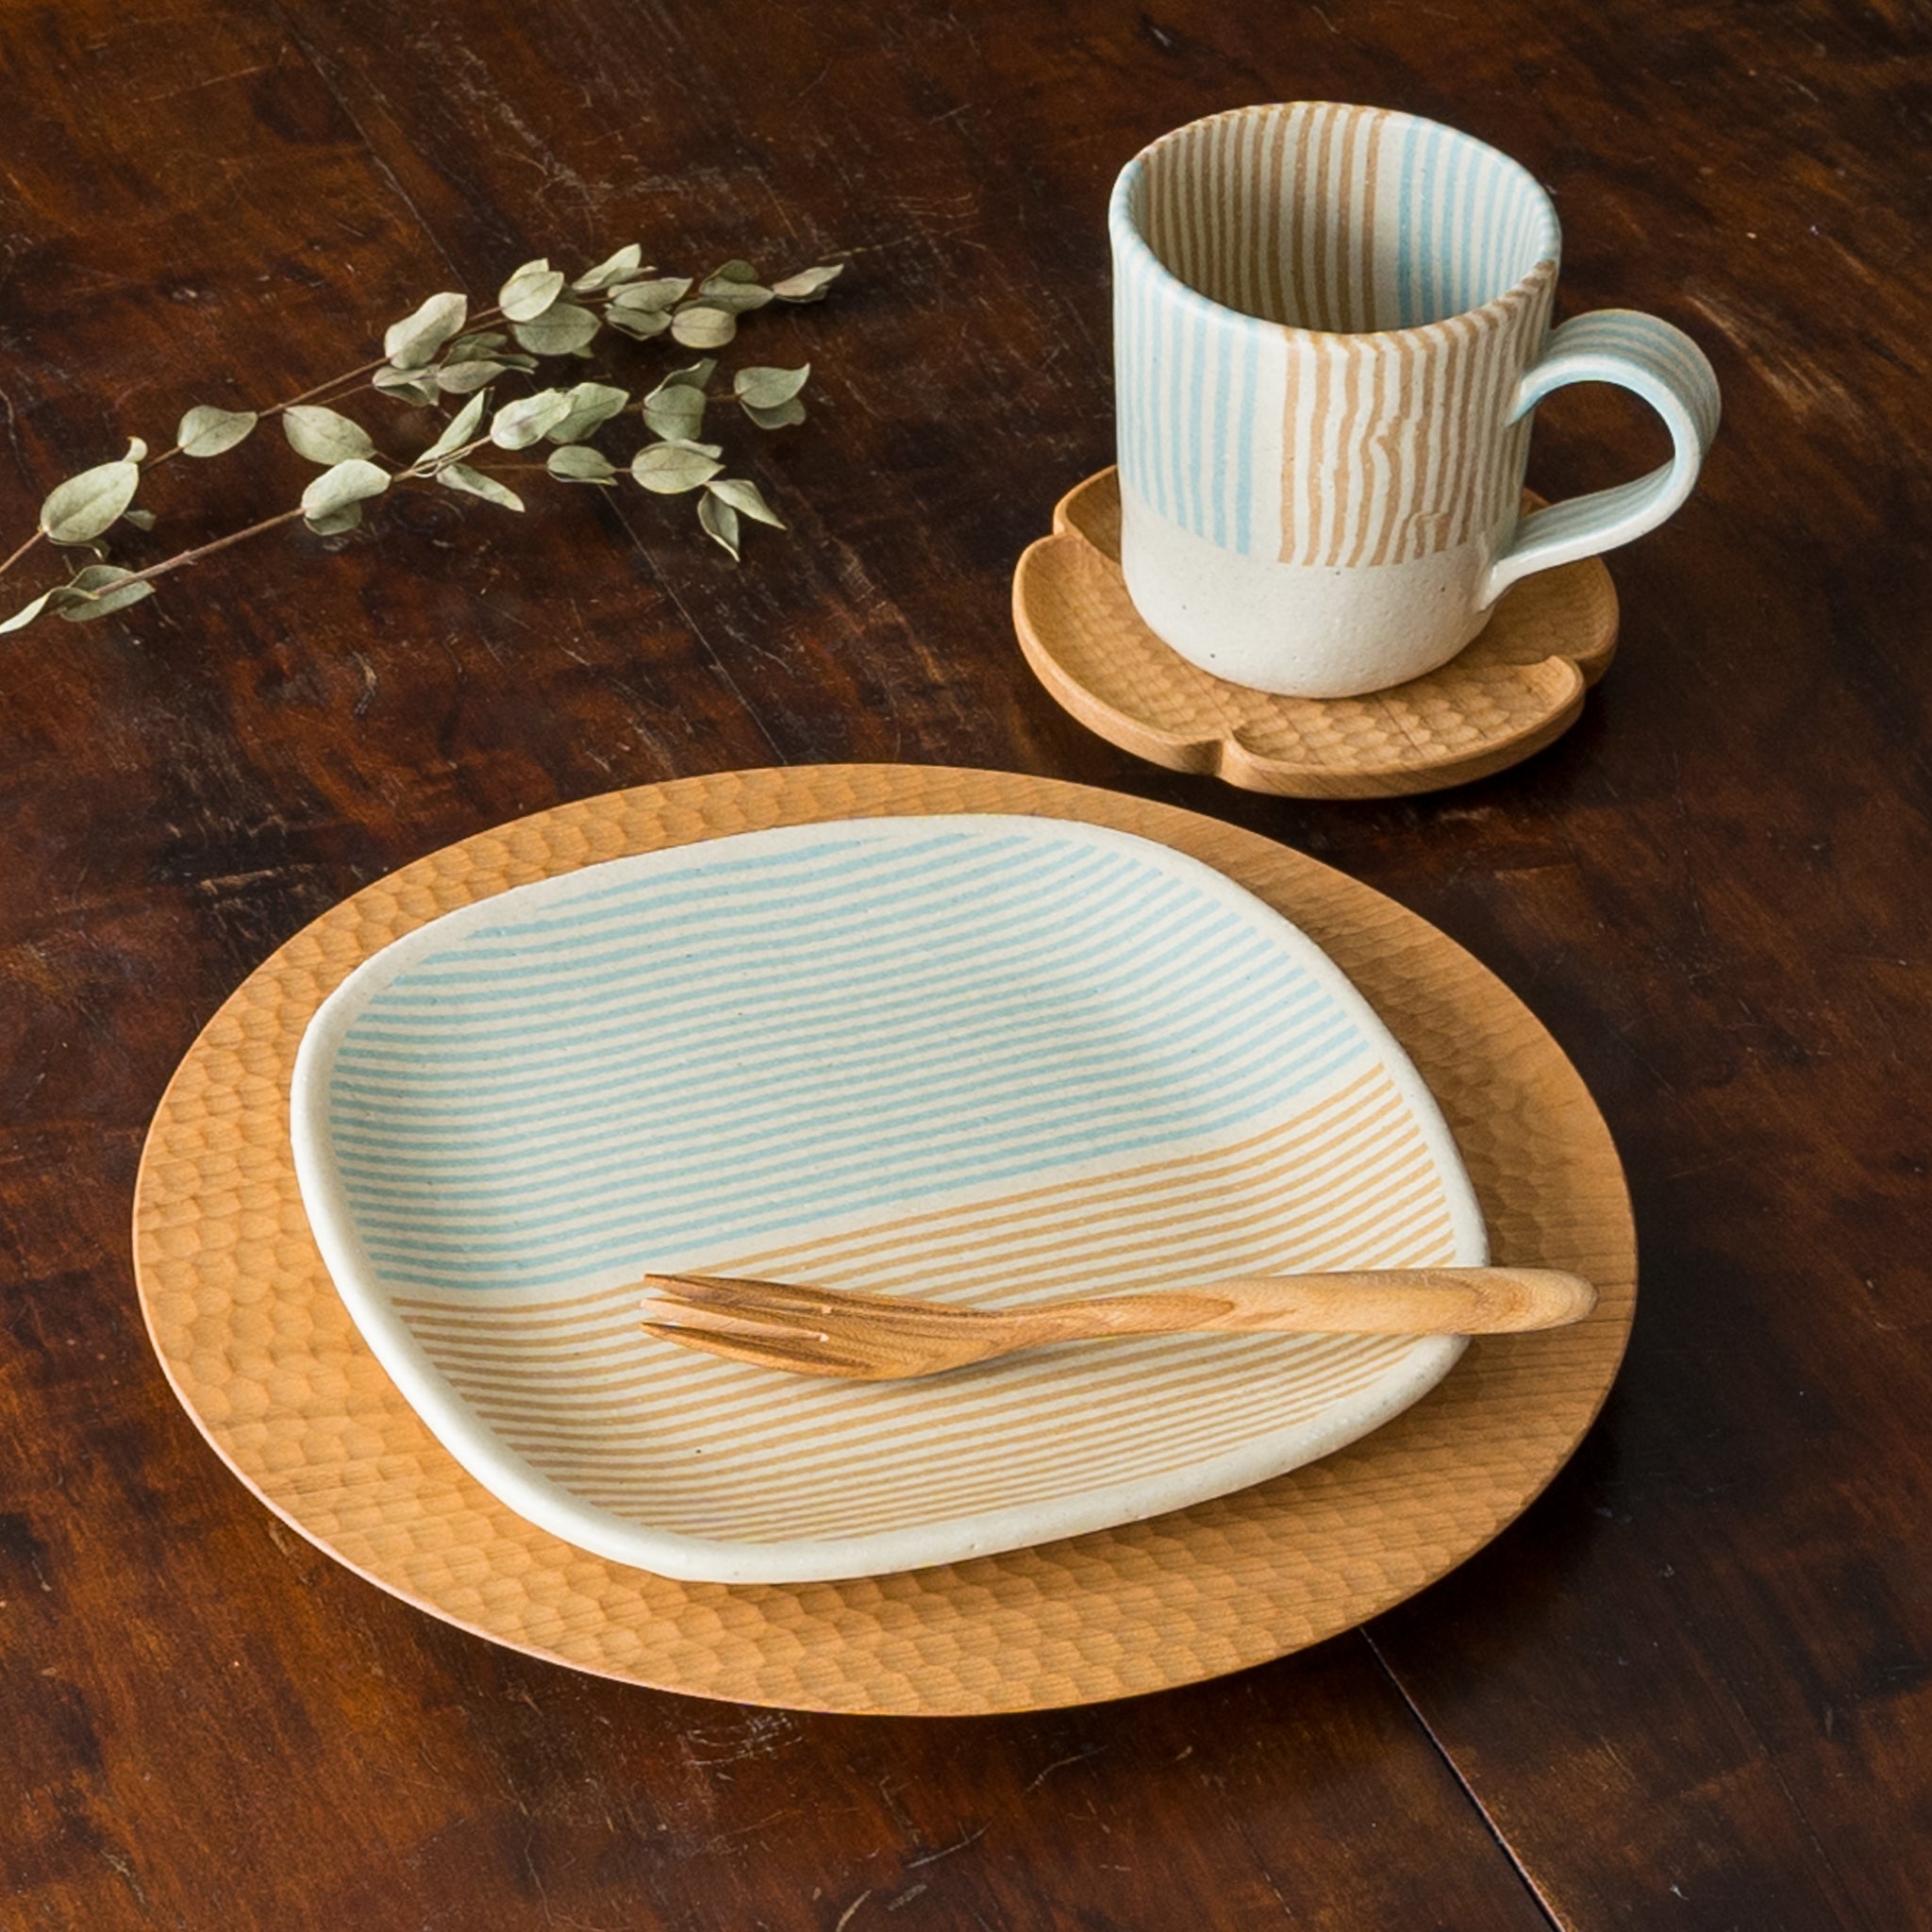 Hanako Sakashita's kneaded square plate and mug perfect for breakfast and lunch